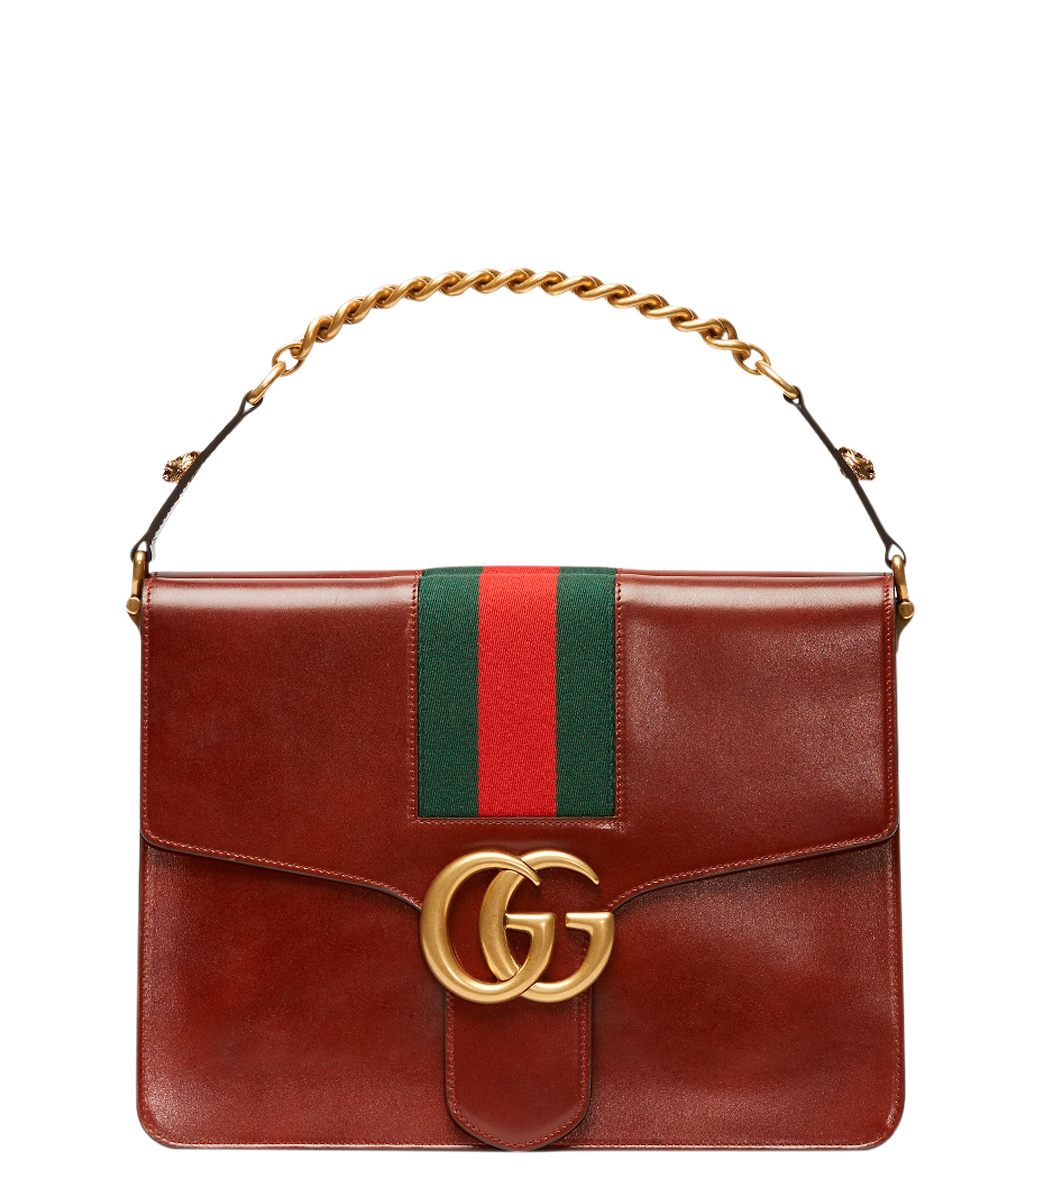 Gucci bag ShopBazaar.jpg